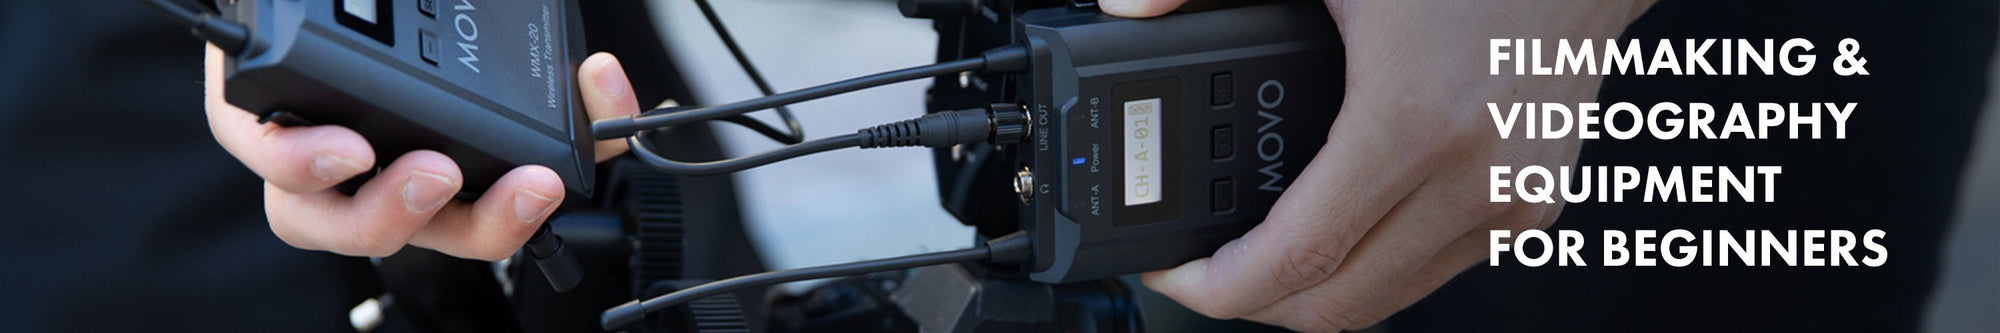 Filmmaking & Videography Equipment for Beginners